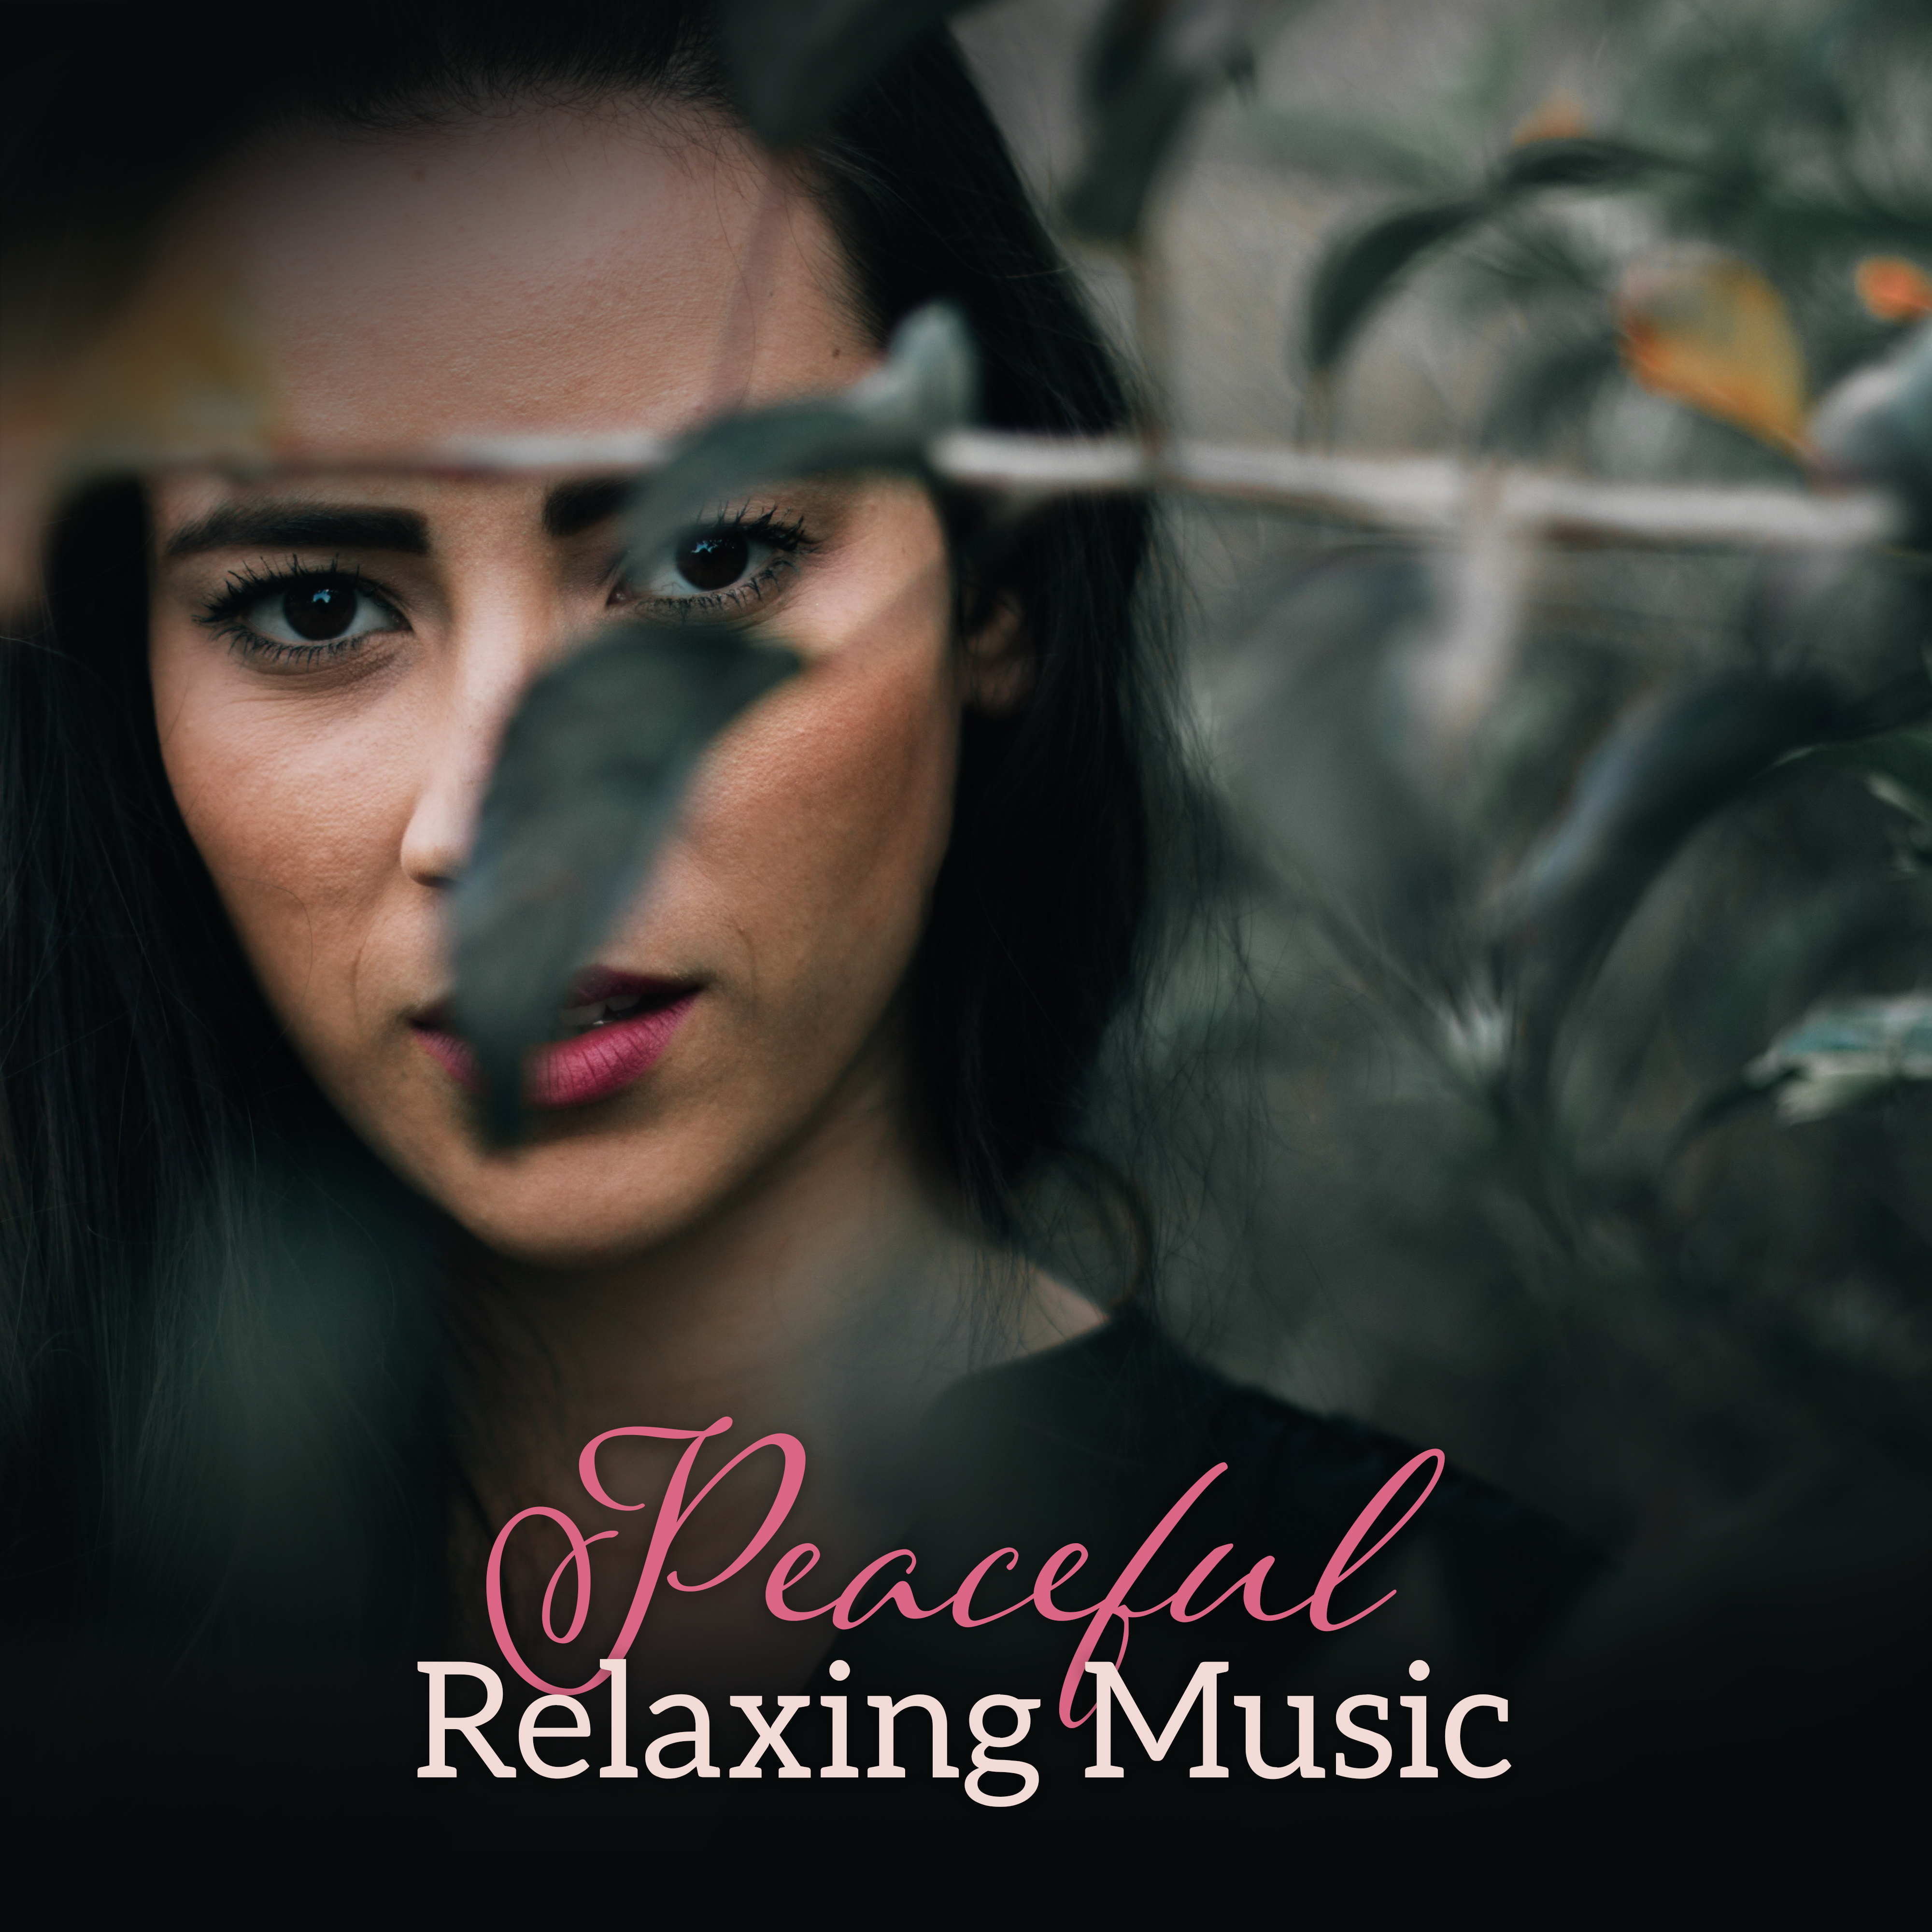 Peaceful Relaxing Music